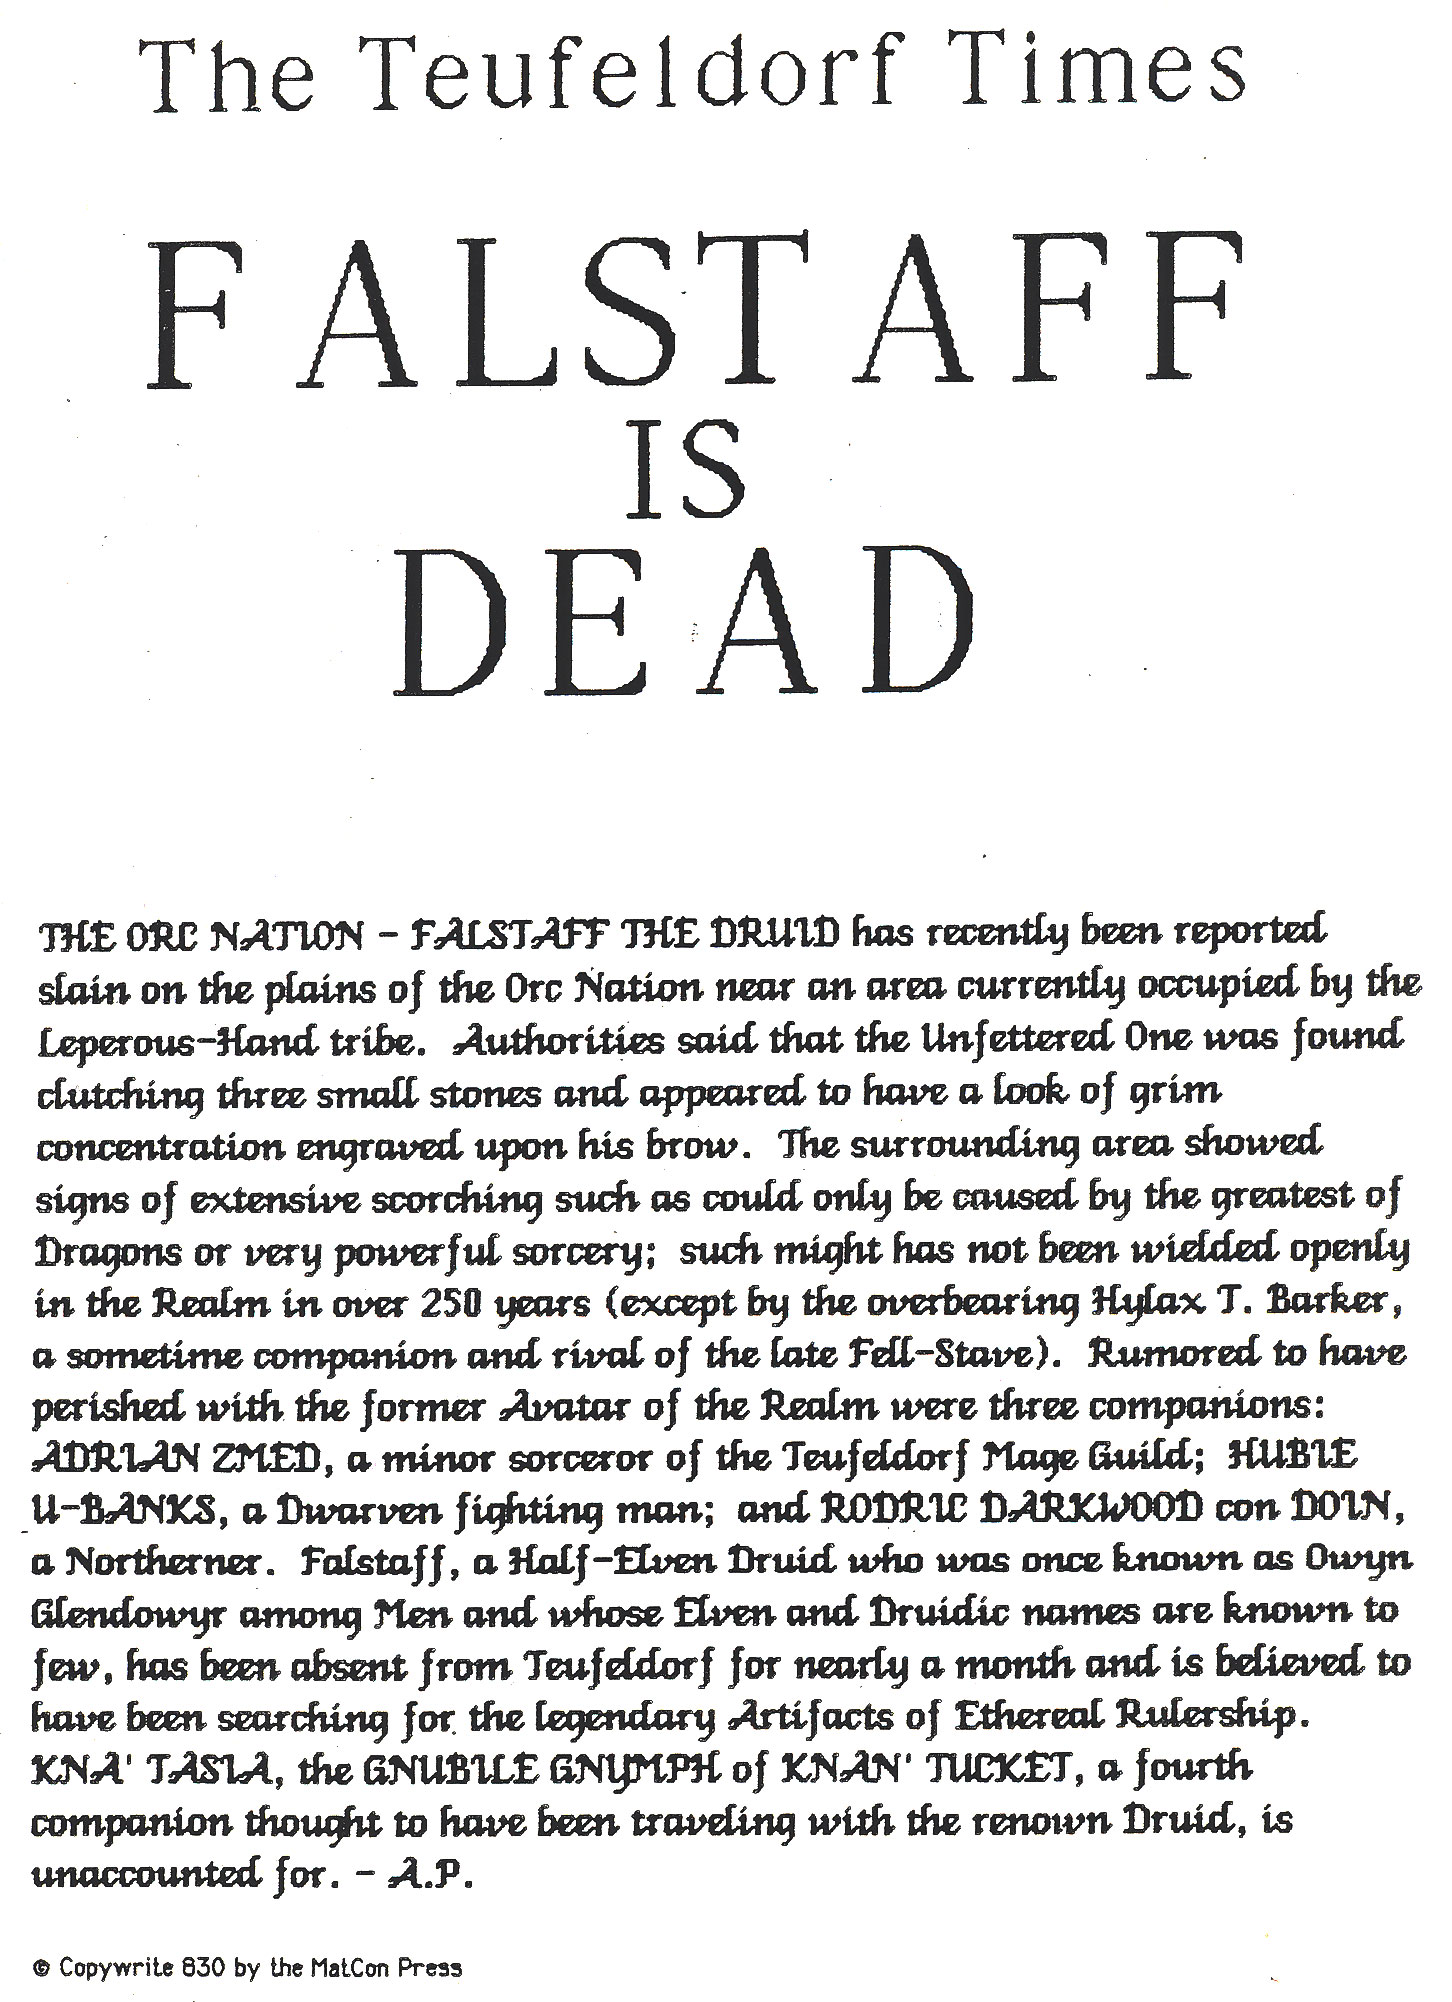 Falstaff is dead.jpg